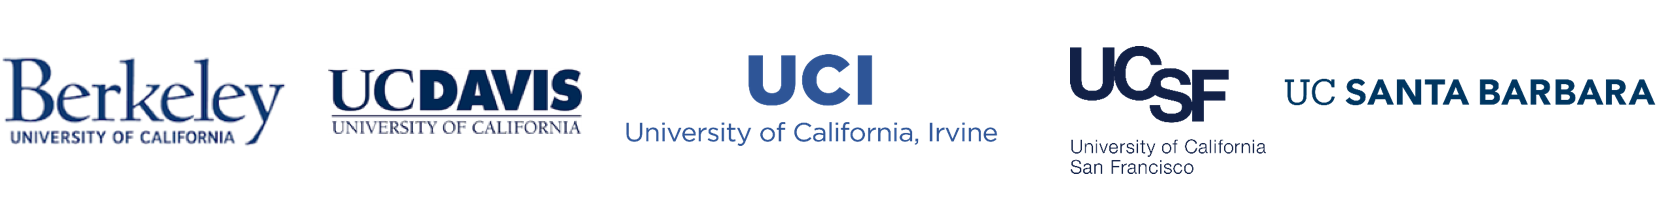 5 logos: UC Berkeley, UC Davis, UC Irvine, UCSF, UC Santa Barbara